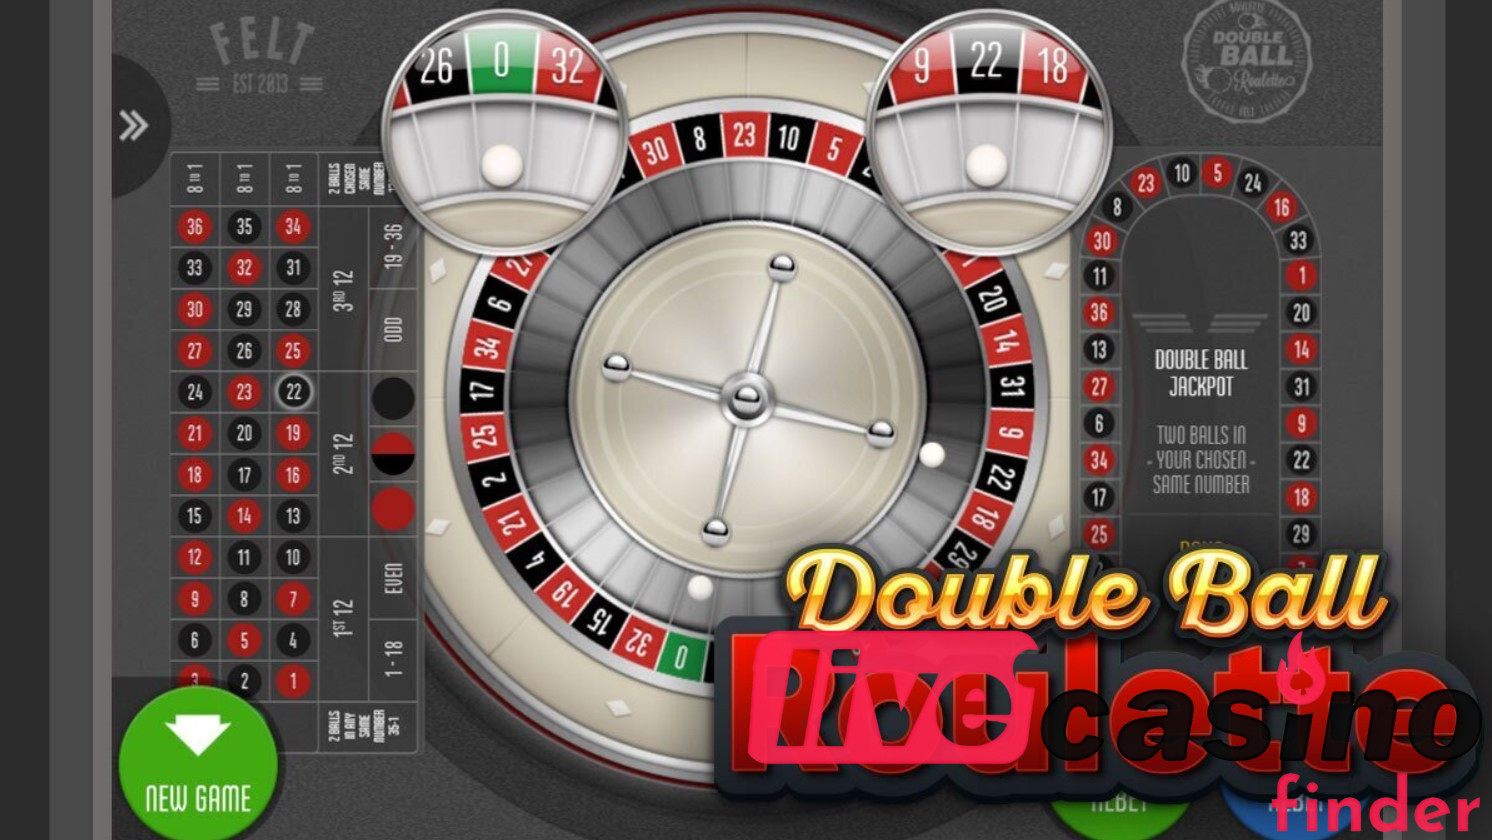 Live casinospel Double Ball Roulette.